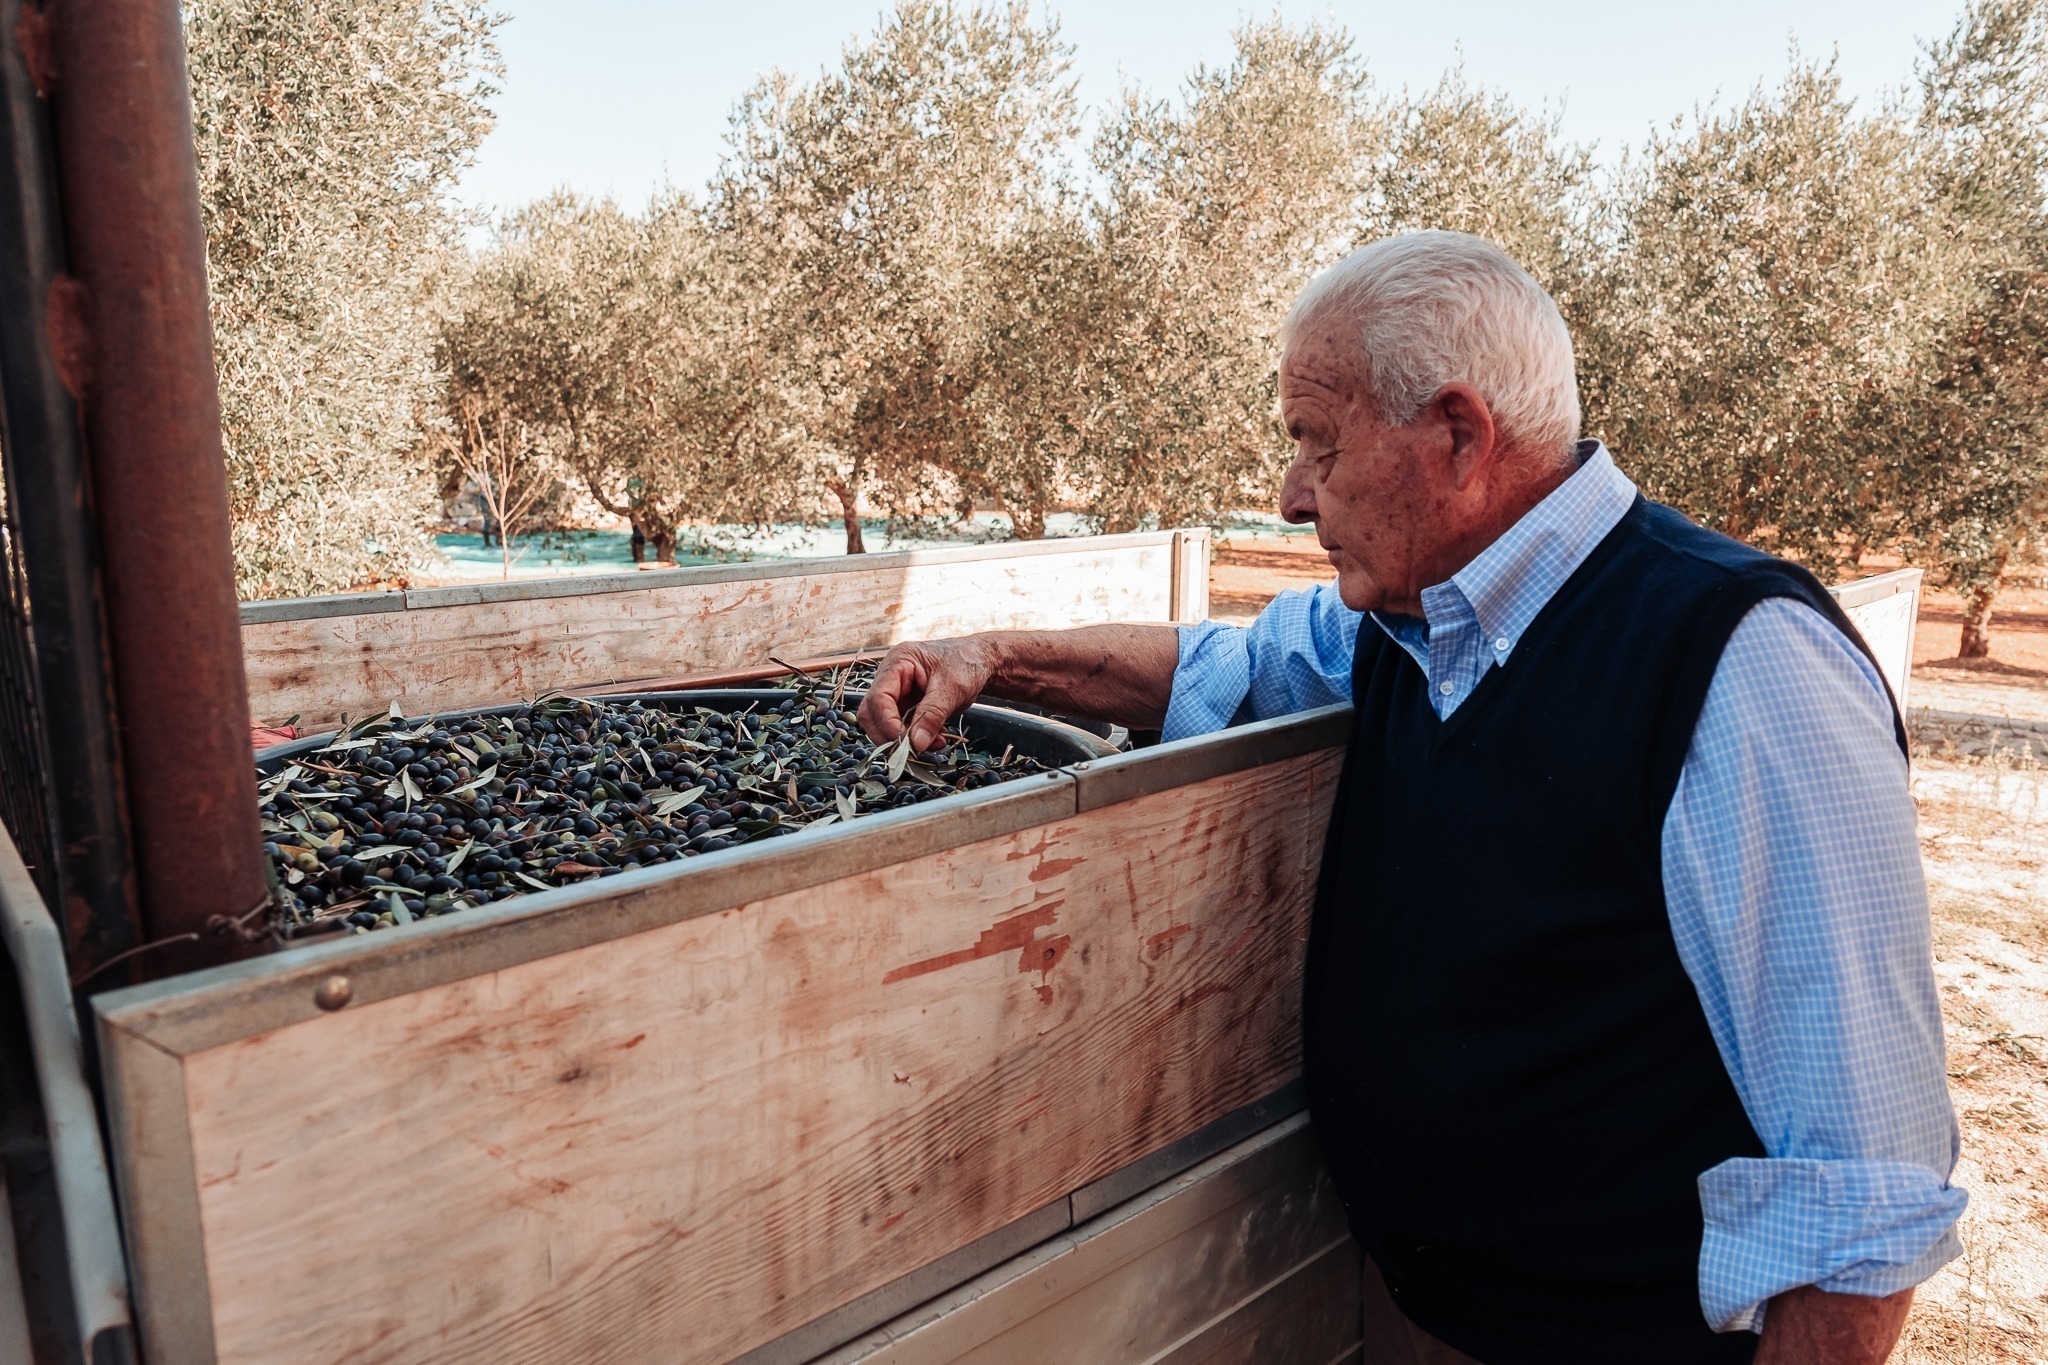 TORRE SANTA SUSANNA, ITALY / OCTOBER 2019: The harvesting of oli